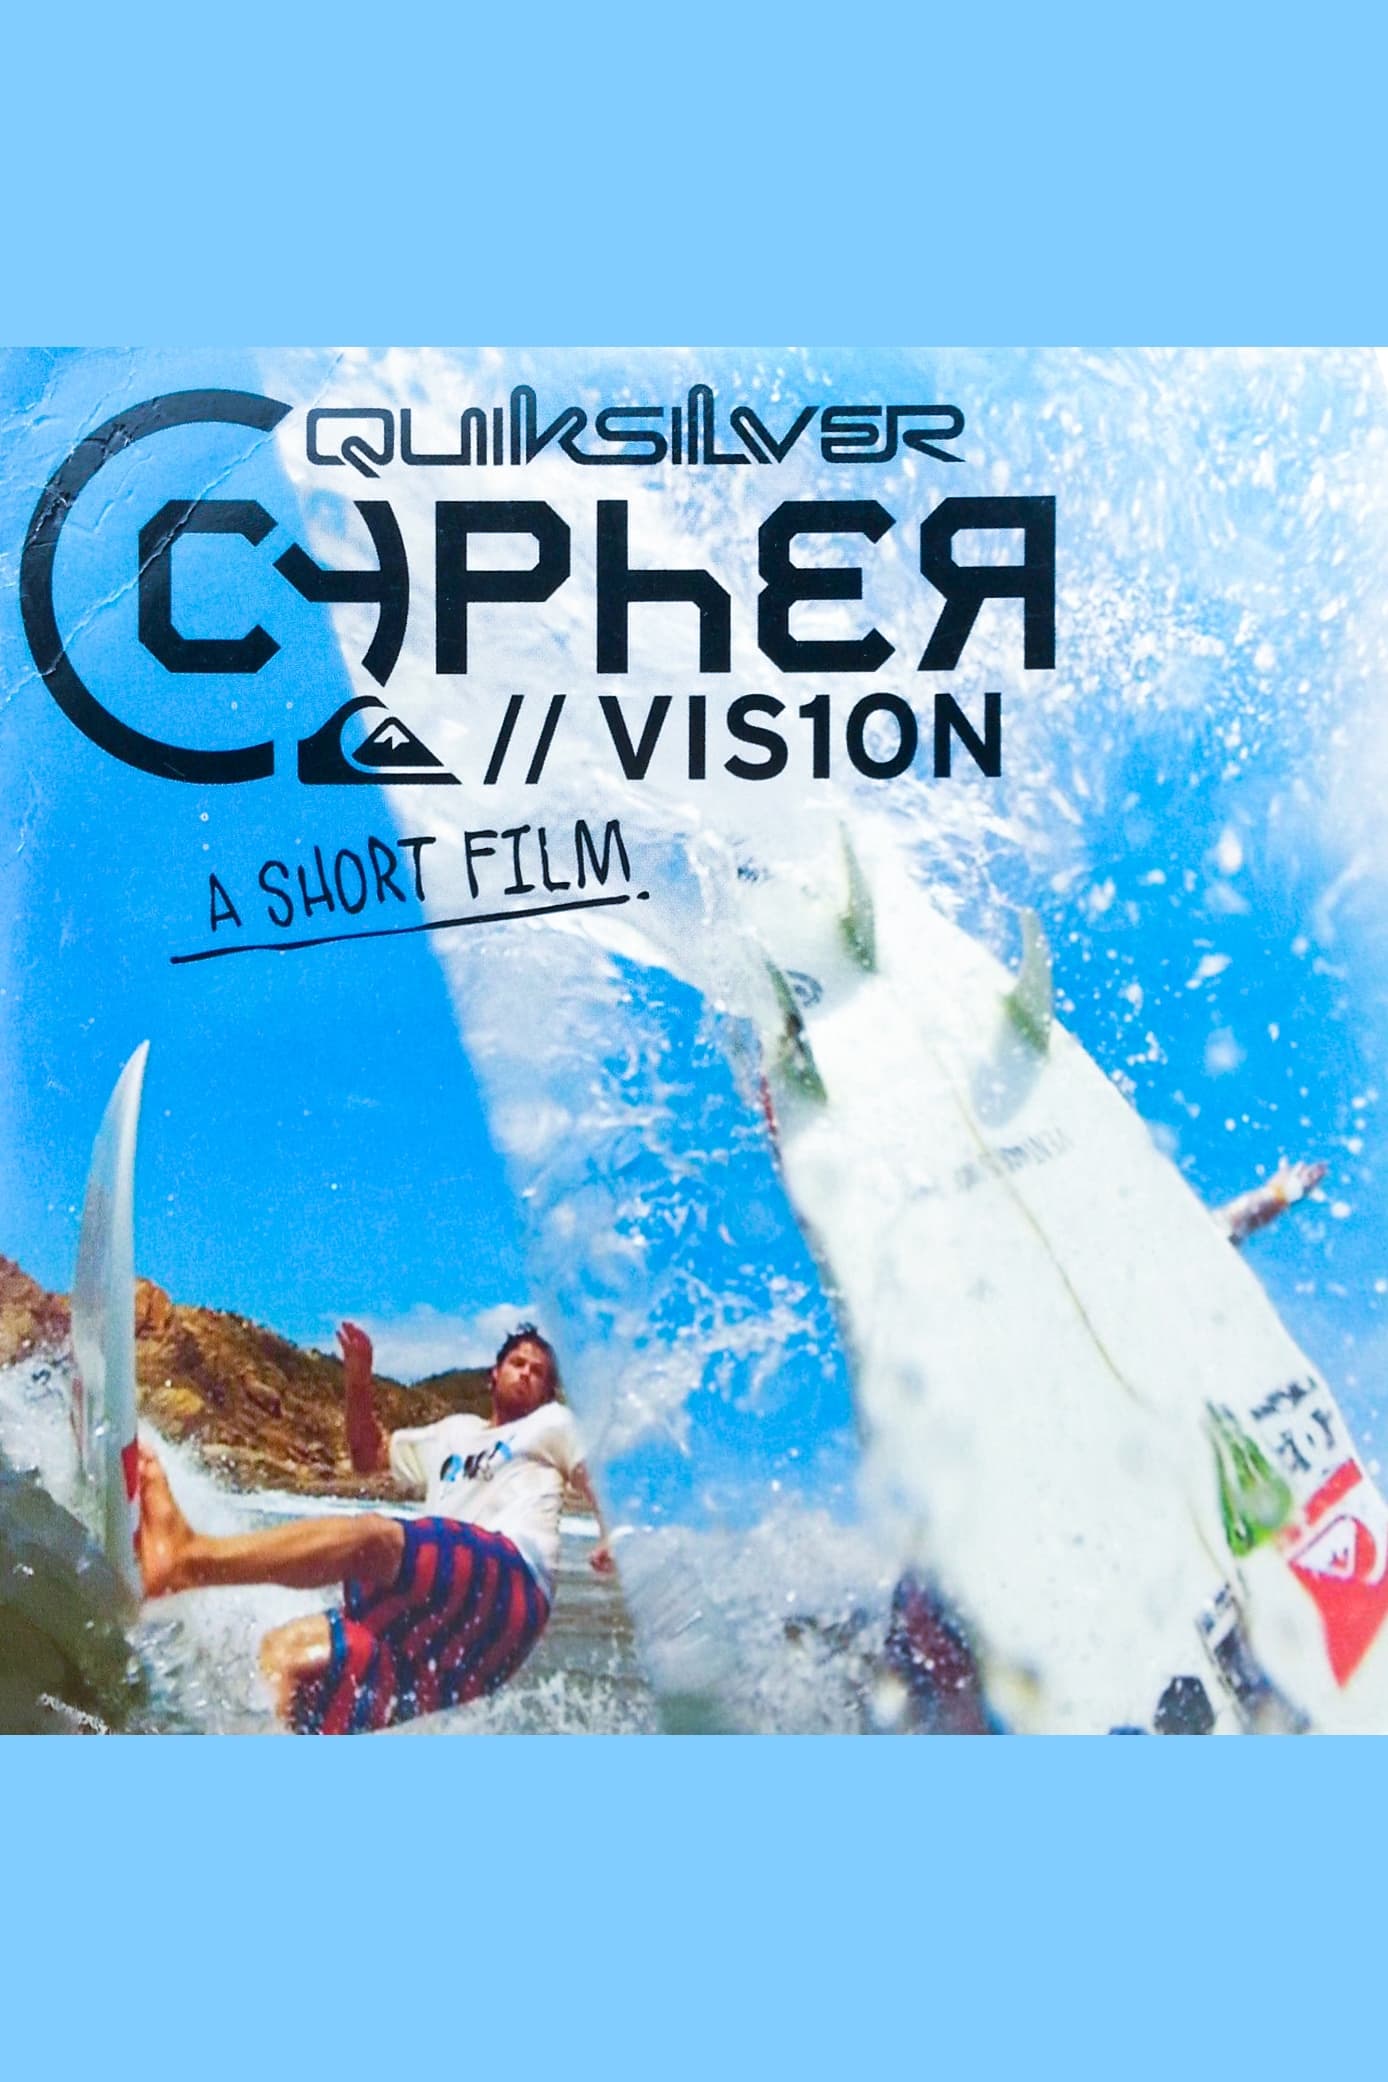 Quiksilver Cypher Vision